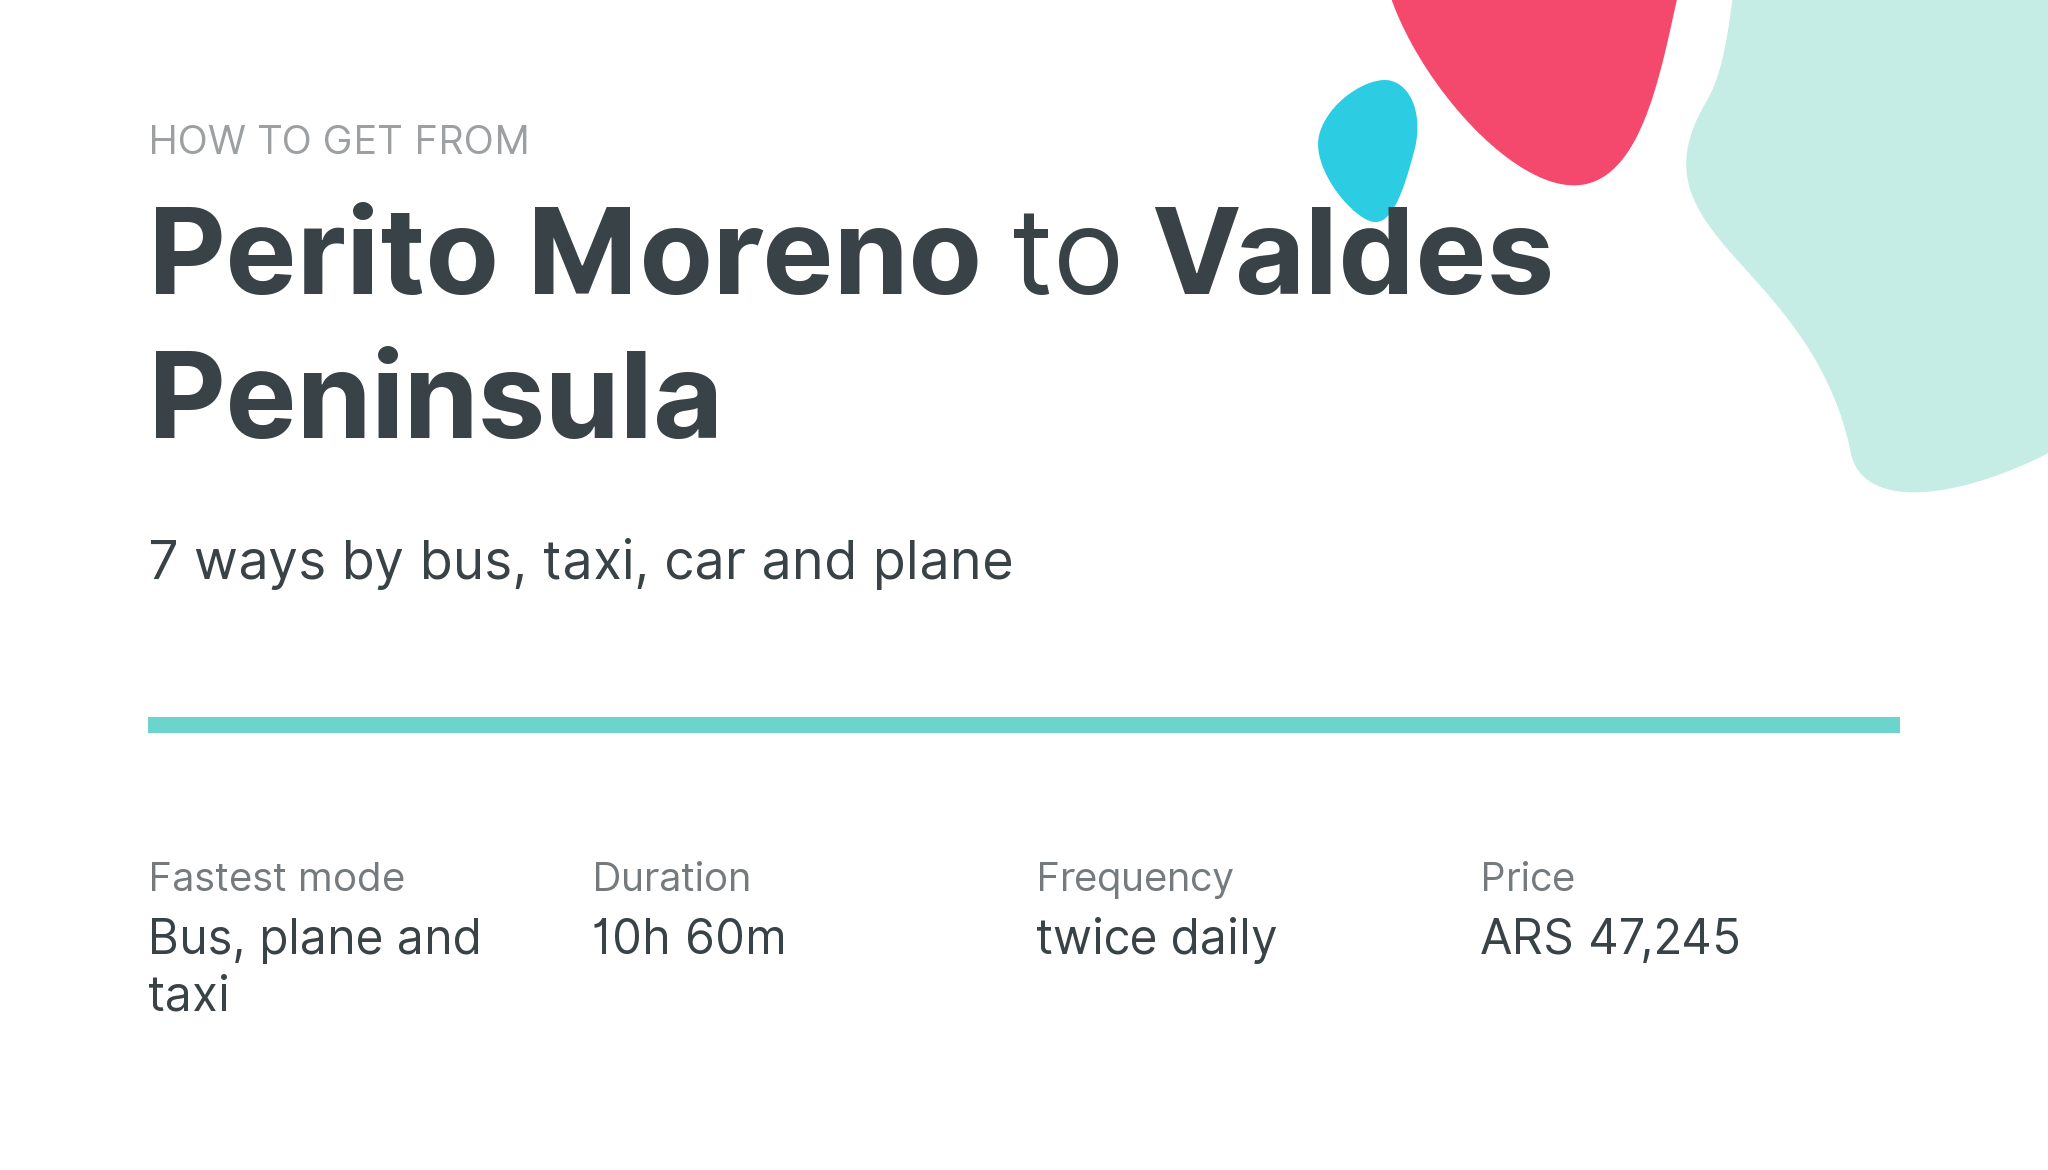 How do I get from Perito Moreno to Valdes Peninsula